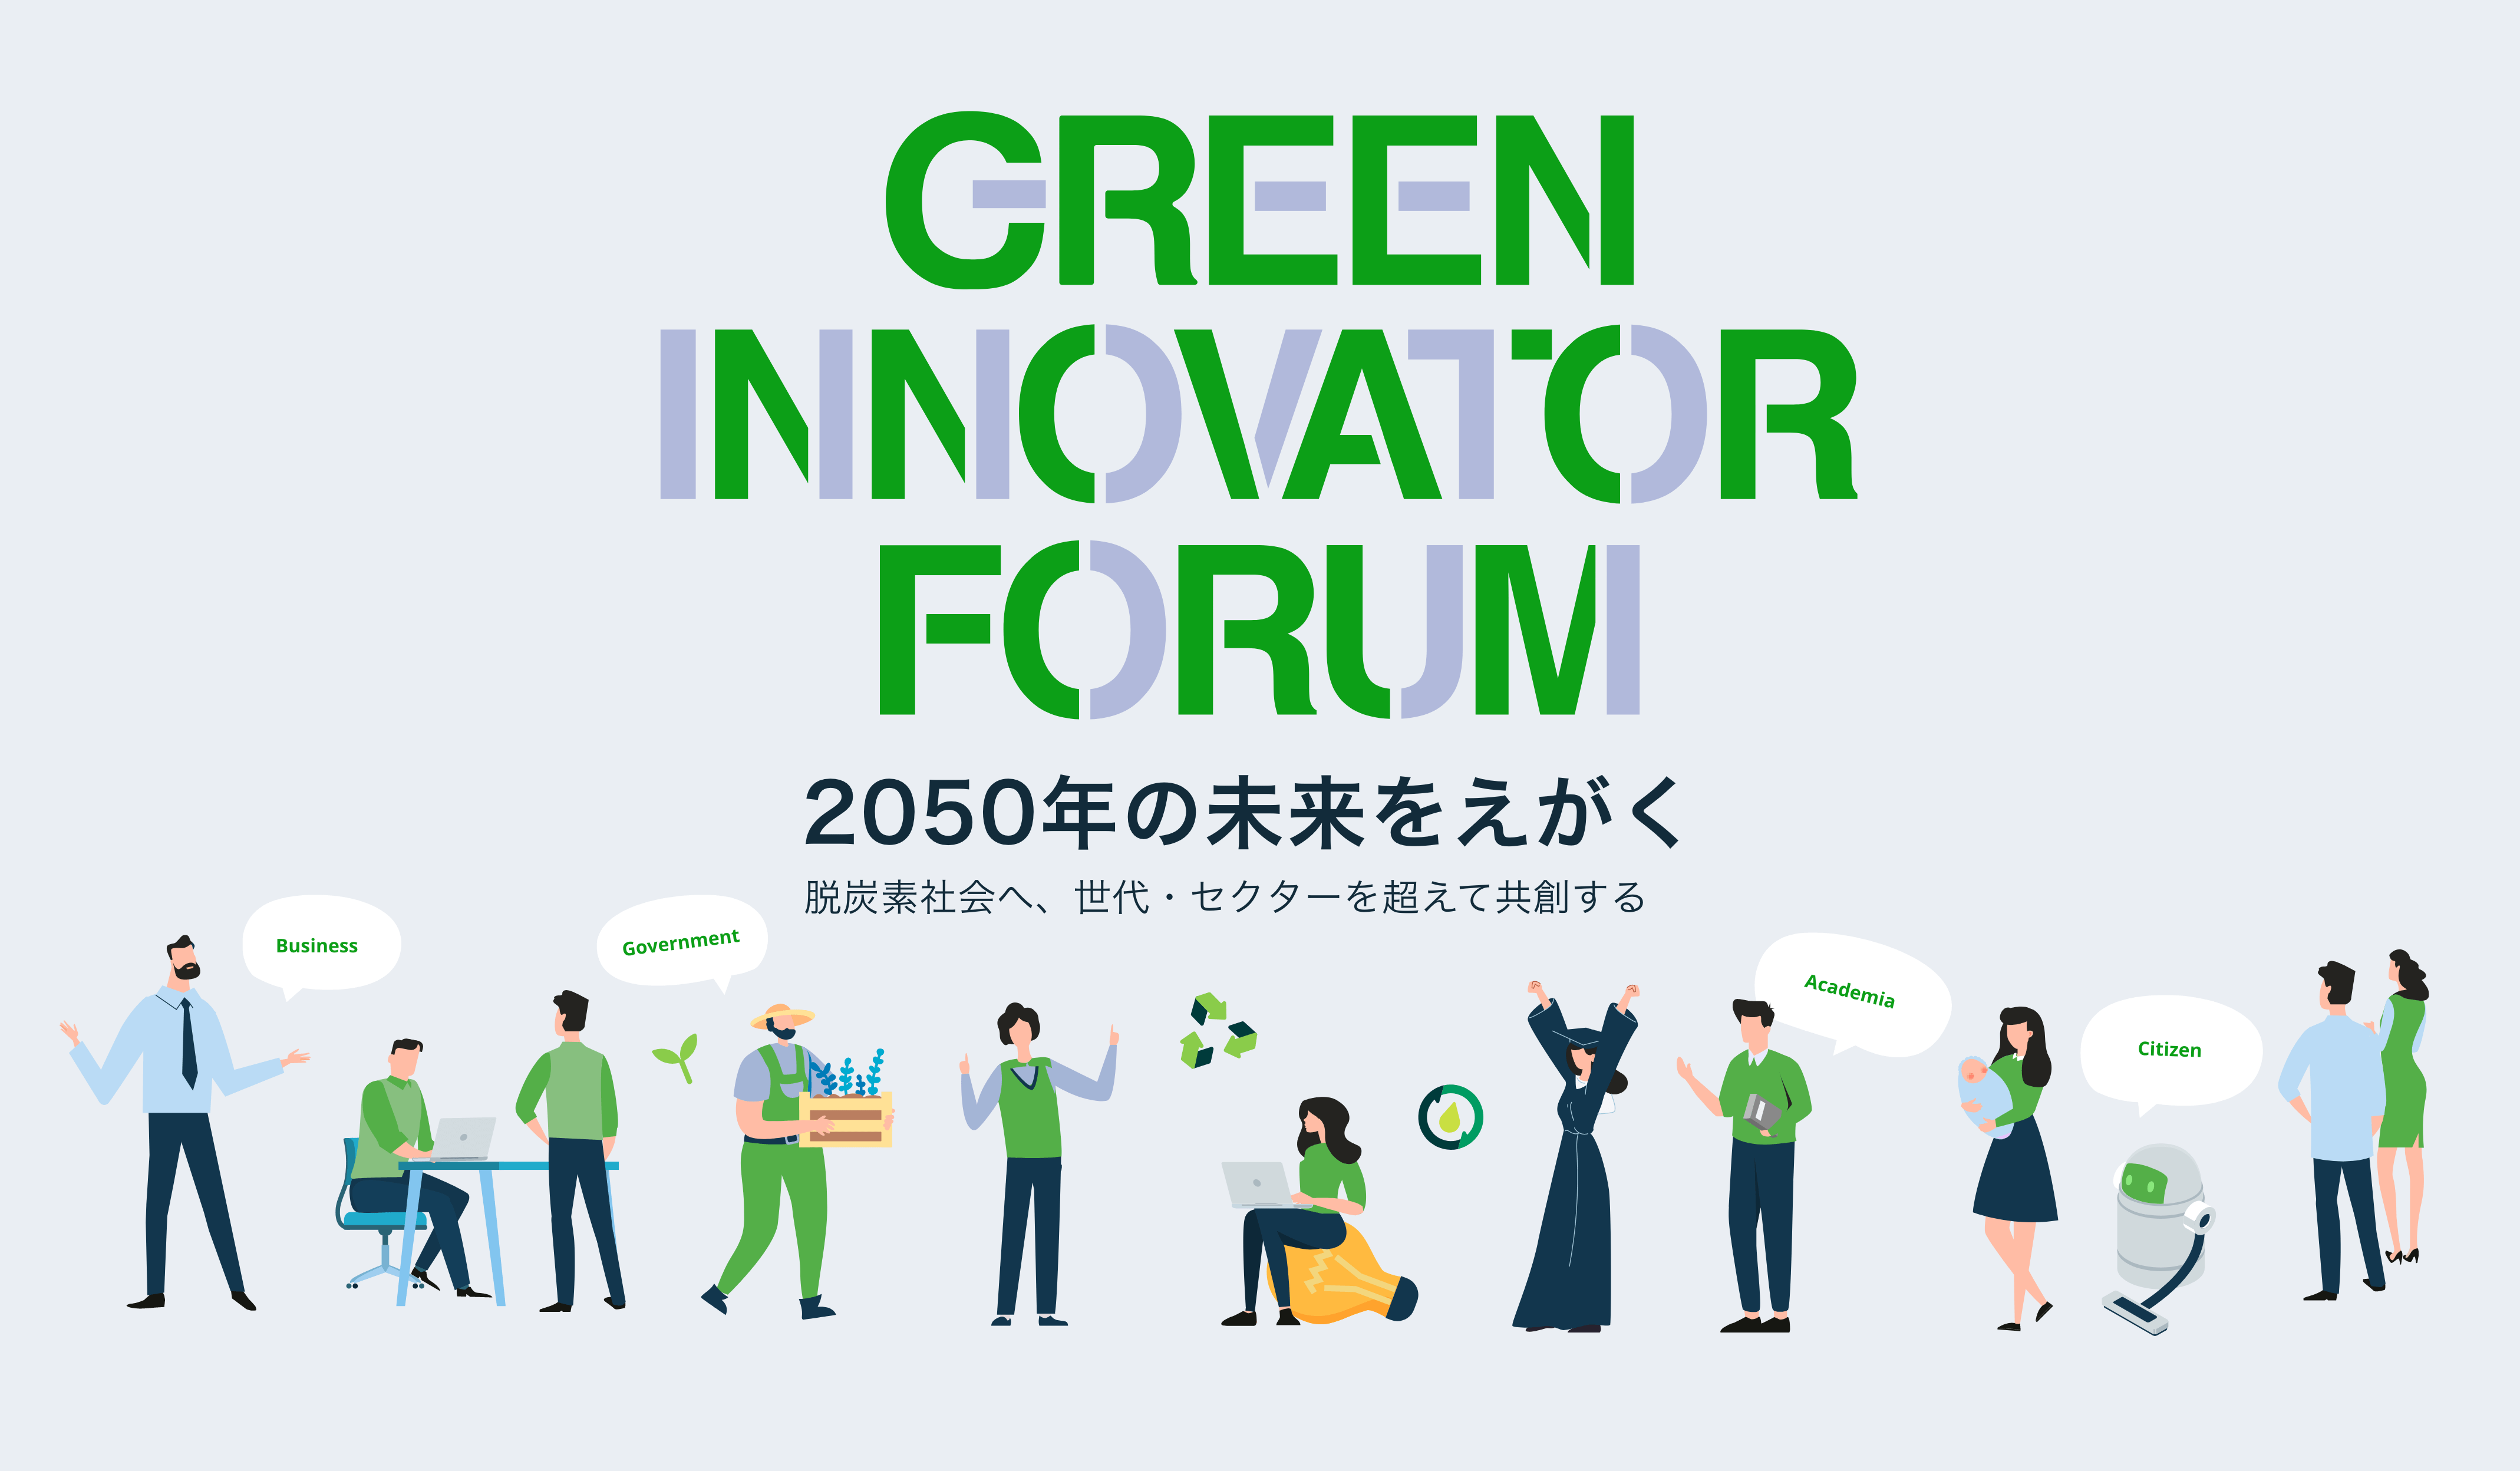 Green Innovator Forum